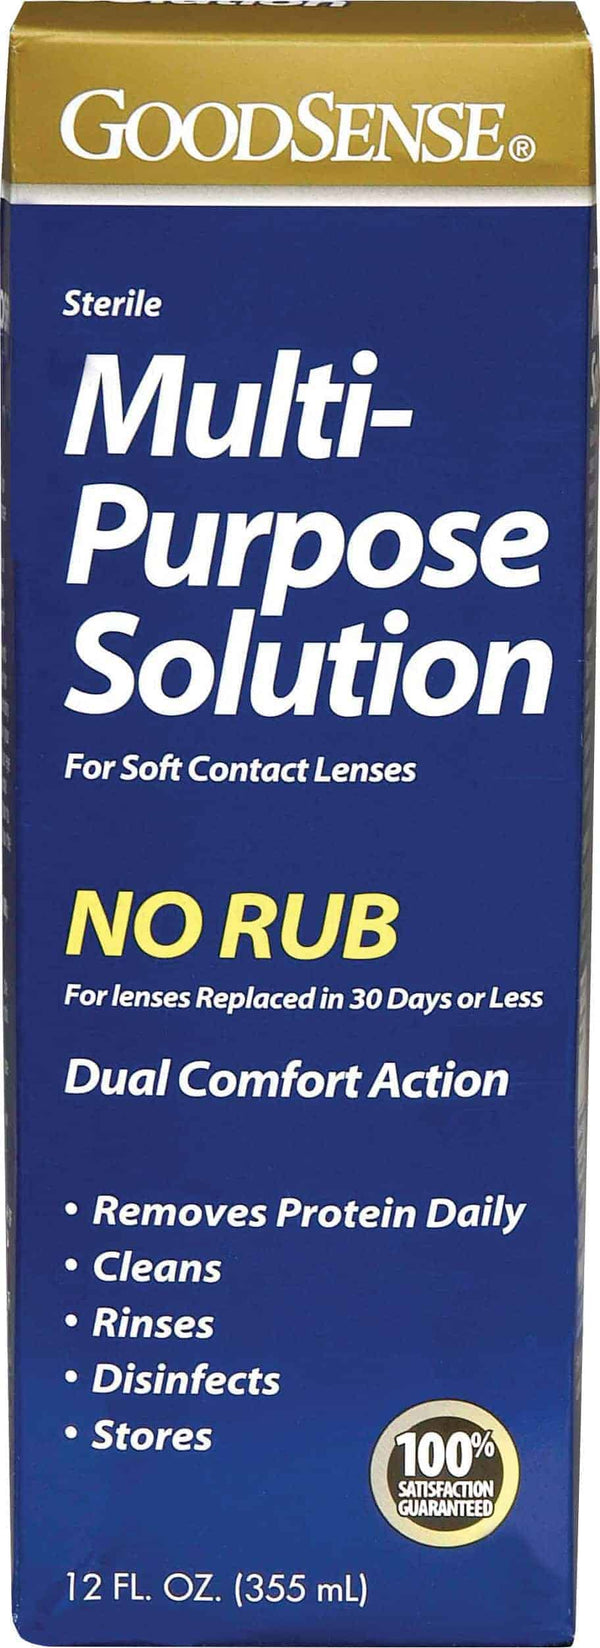 Multi-Purpose Saline Solution for Soft Contact Lenses, 12 oz.